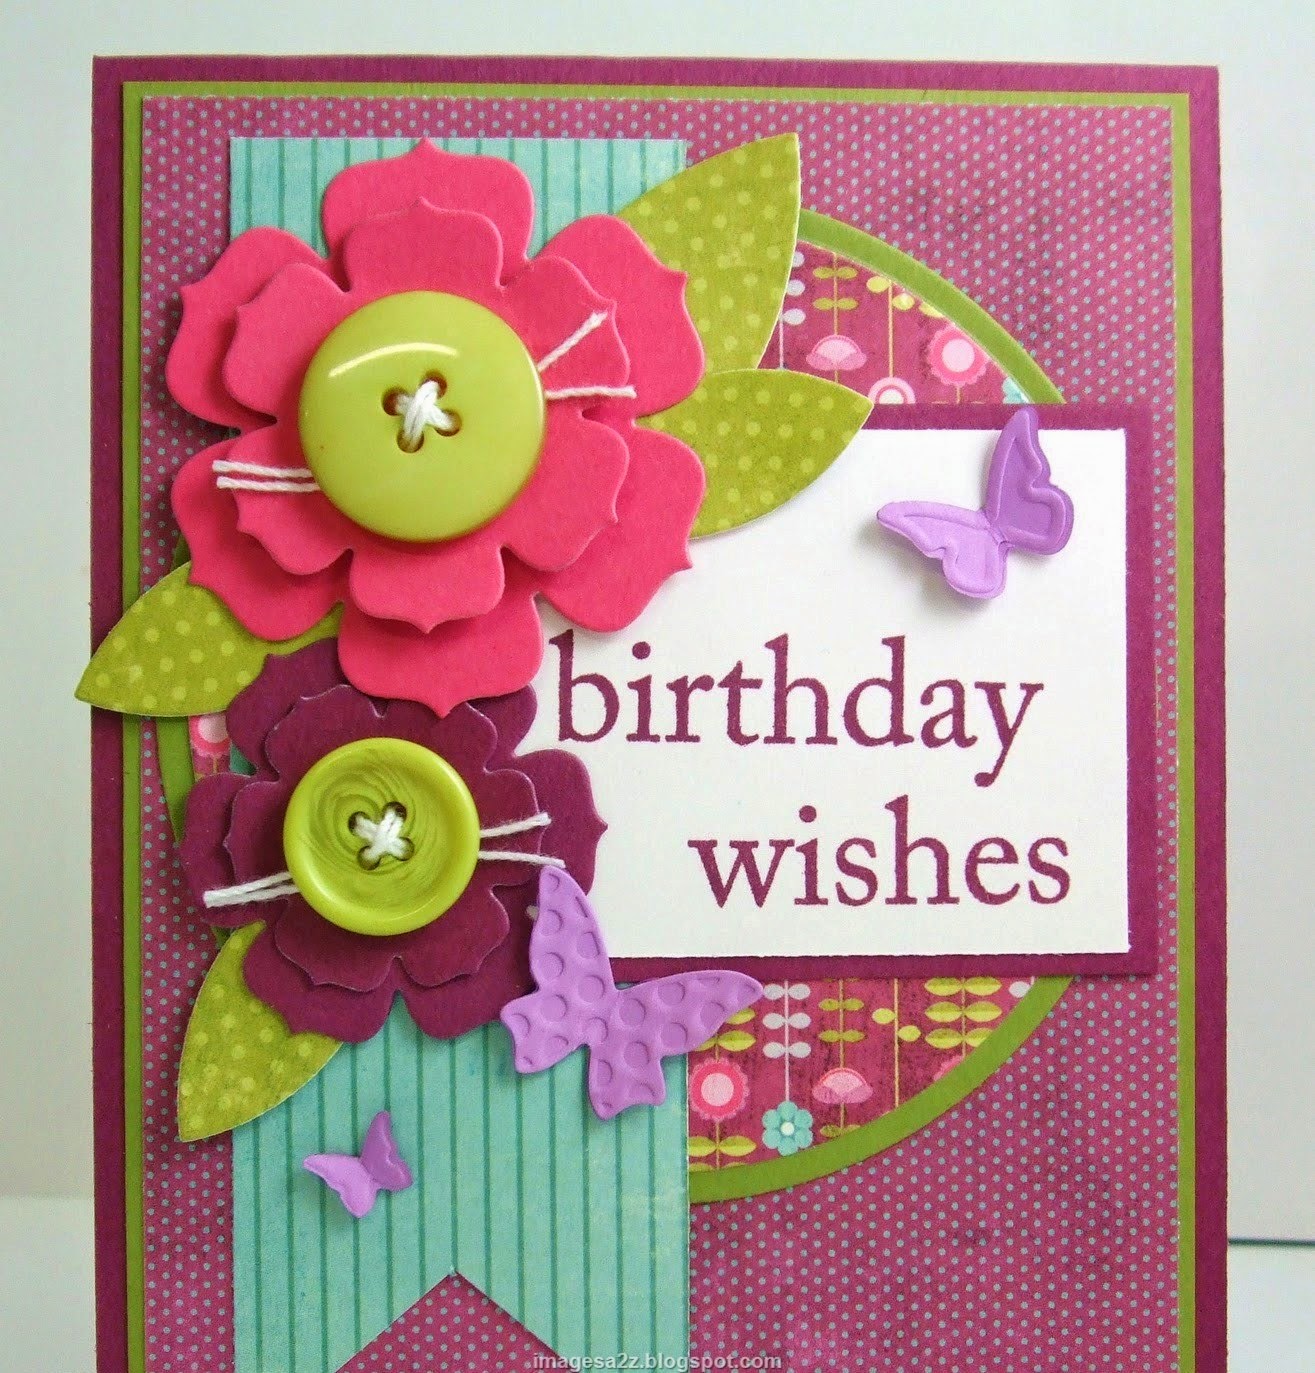 personalized birthday invitations birthday postcards - happy-birthday-wishes-quotes-cakes